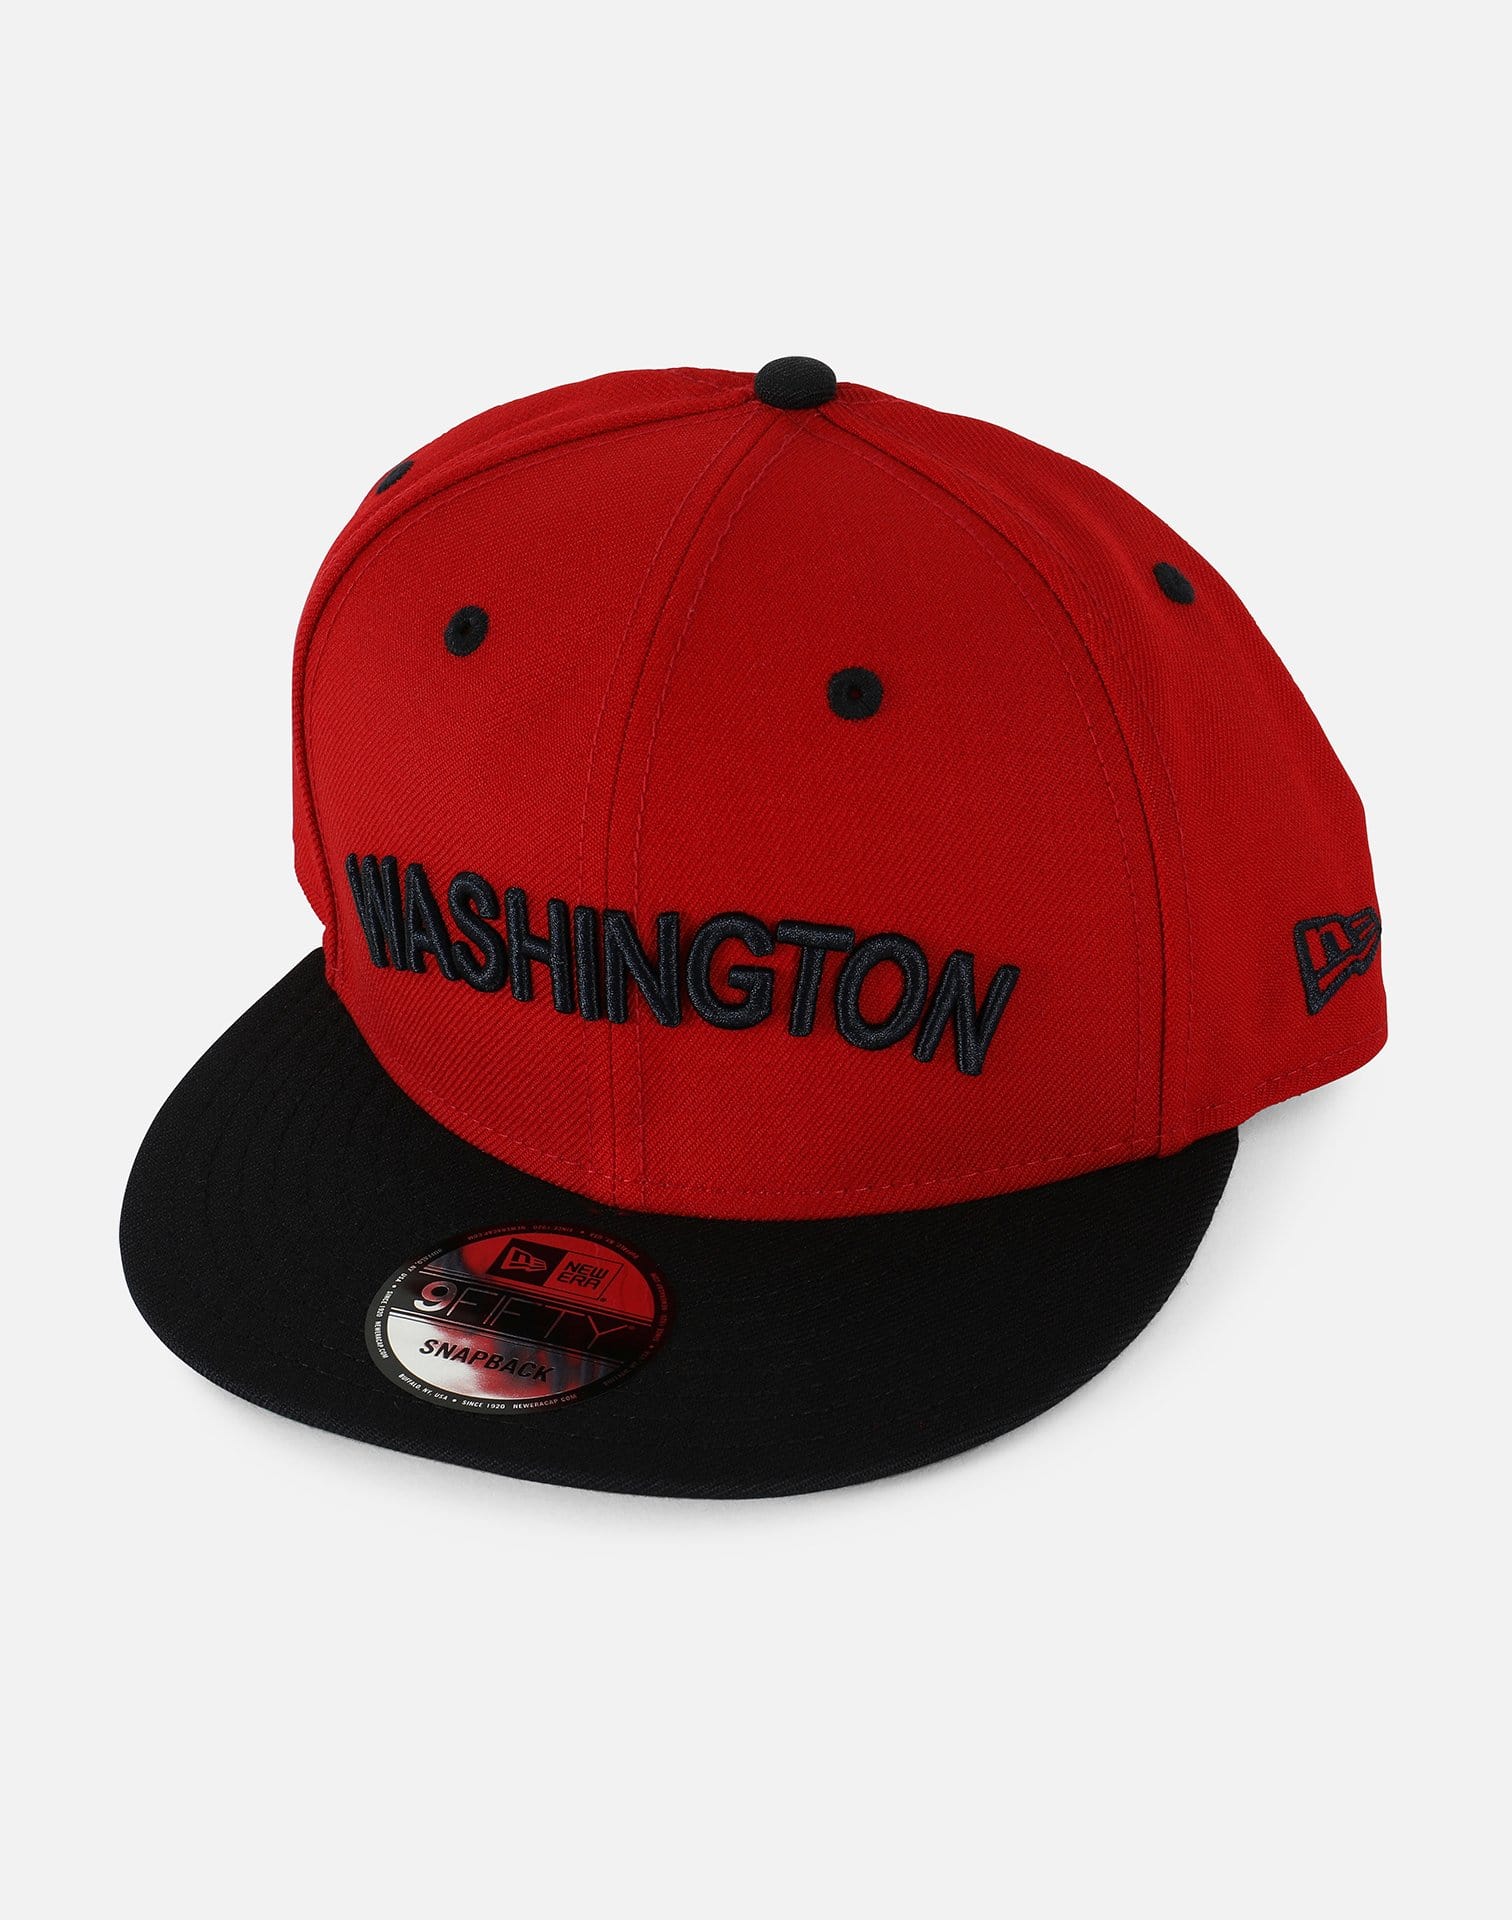 New Era MLB Washington Nationals 9Fifty Snapback Hat